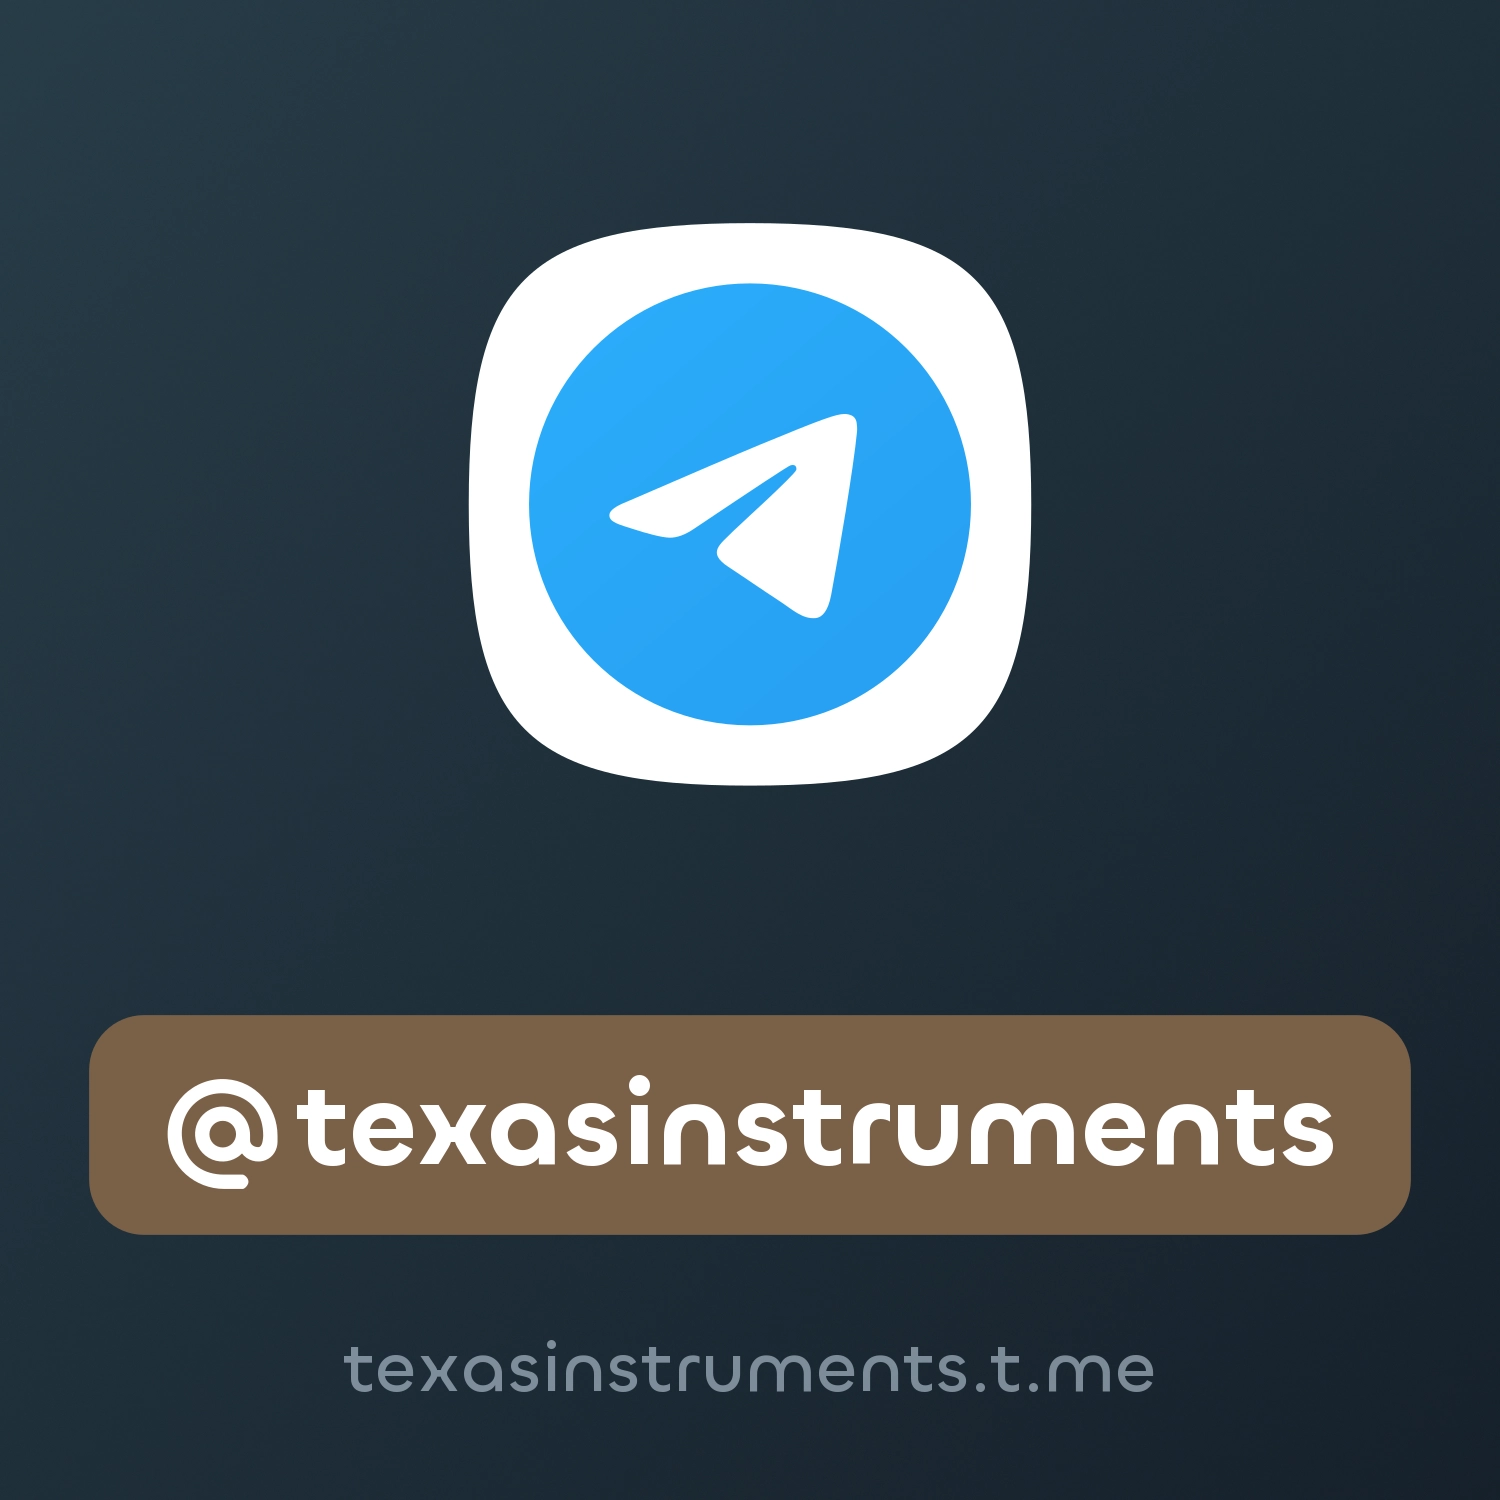 @texasinstruments